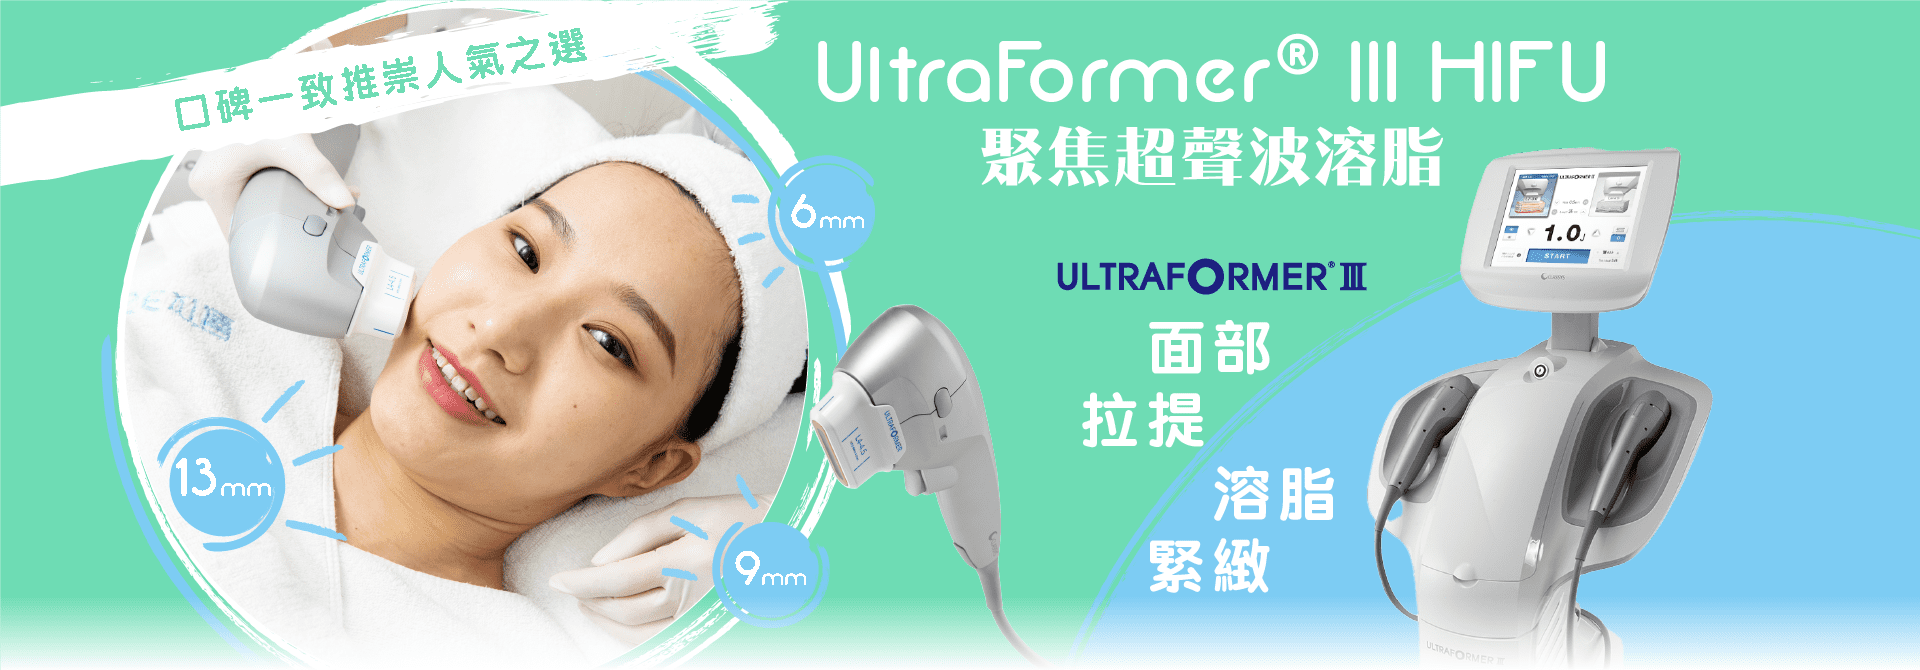 UltraFormer® III HIFU聚焦超聲波溶脂